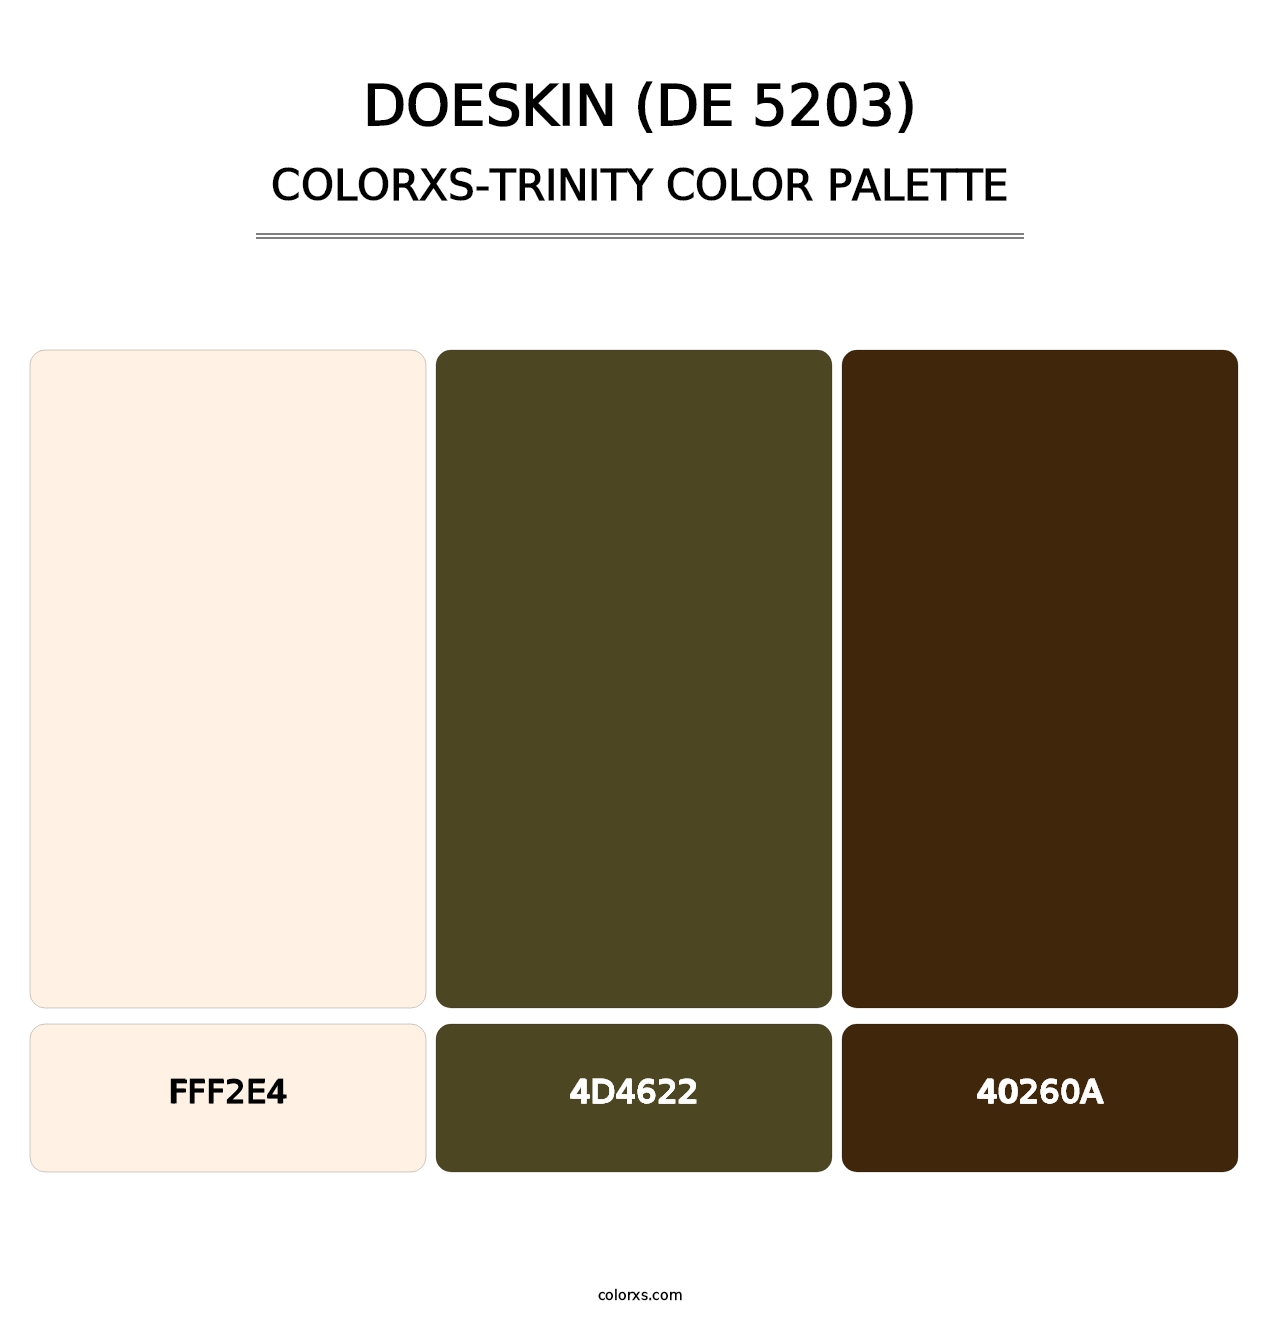 Doeskin (DE 5203) - Colorxs Trinity Palette